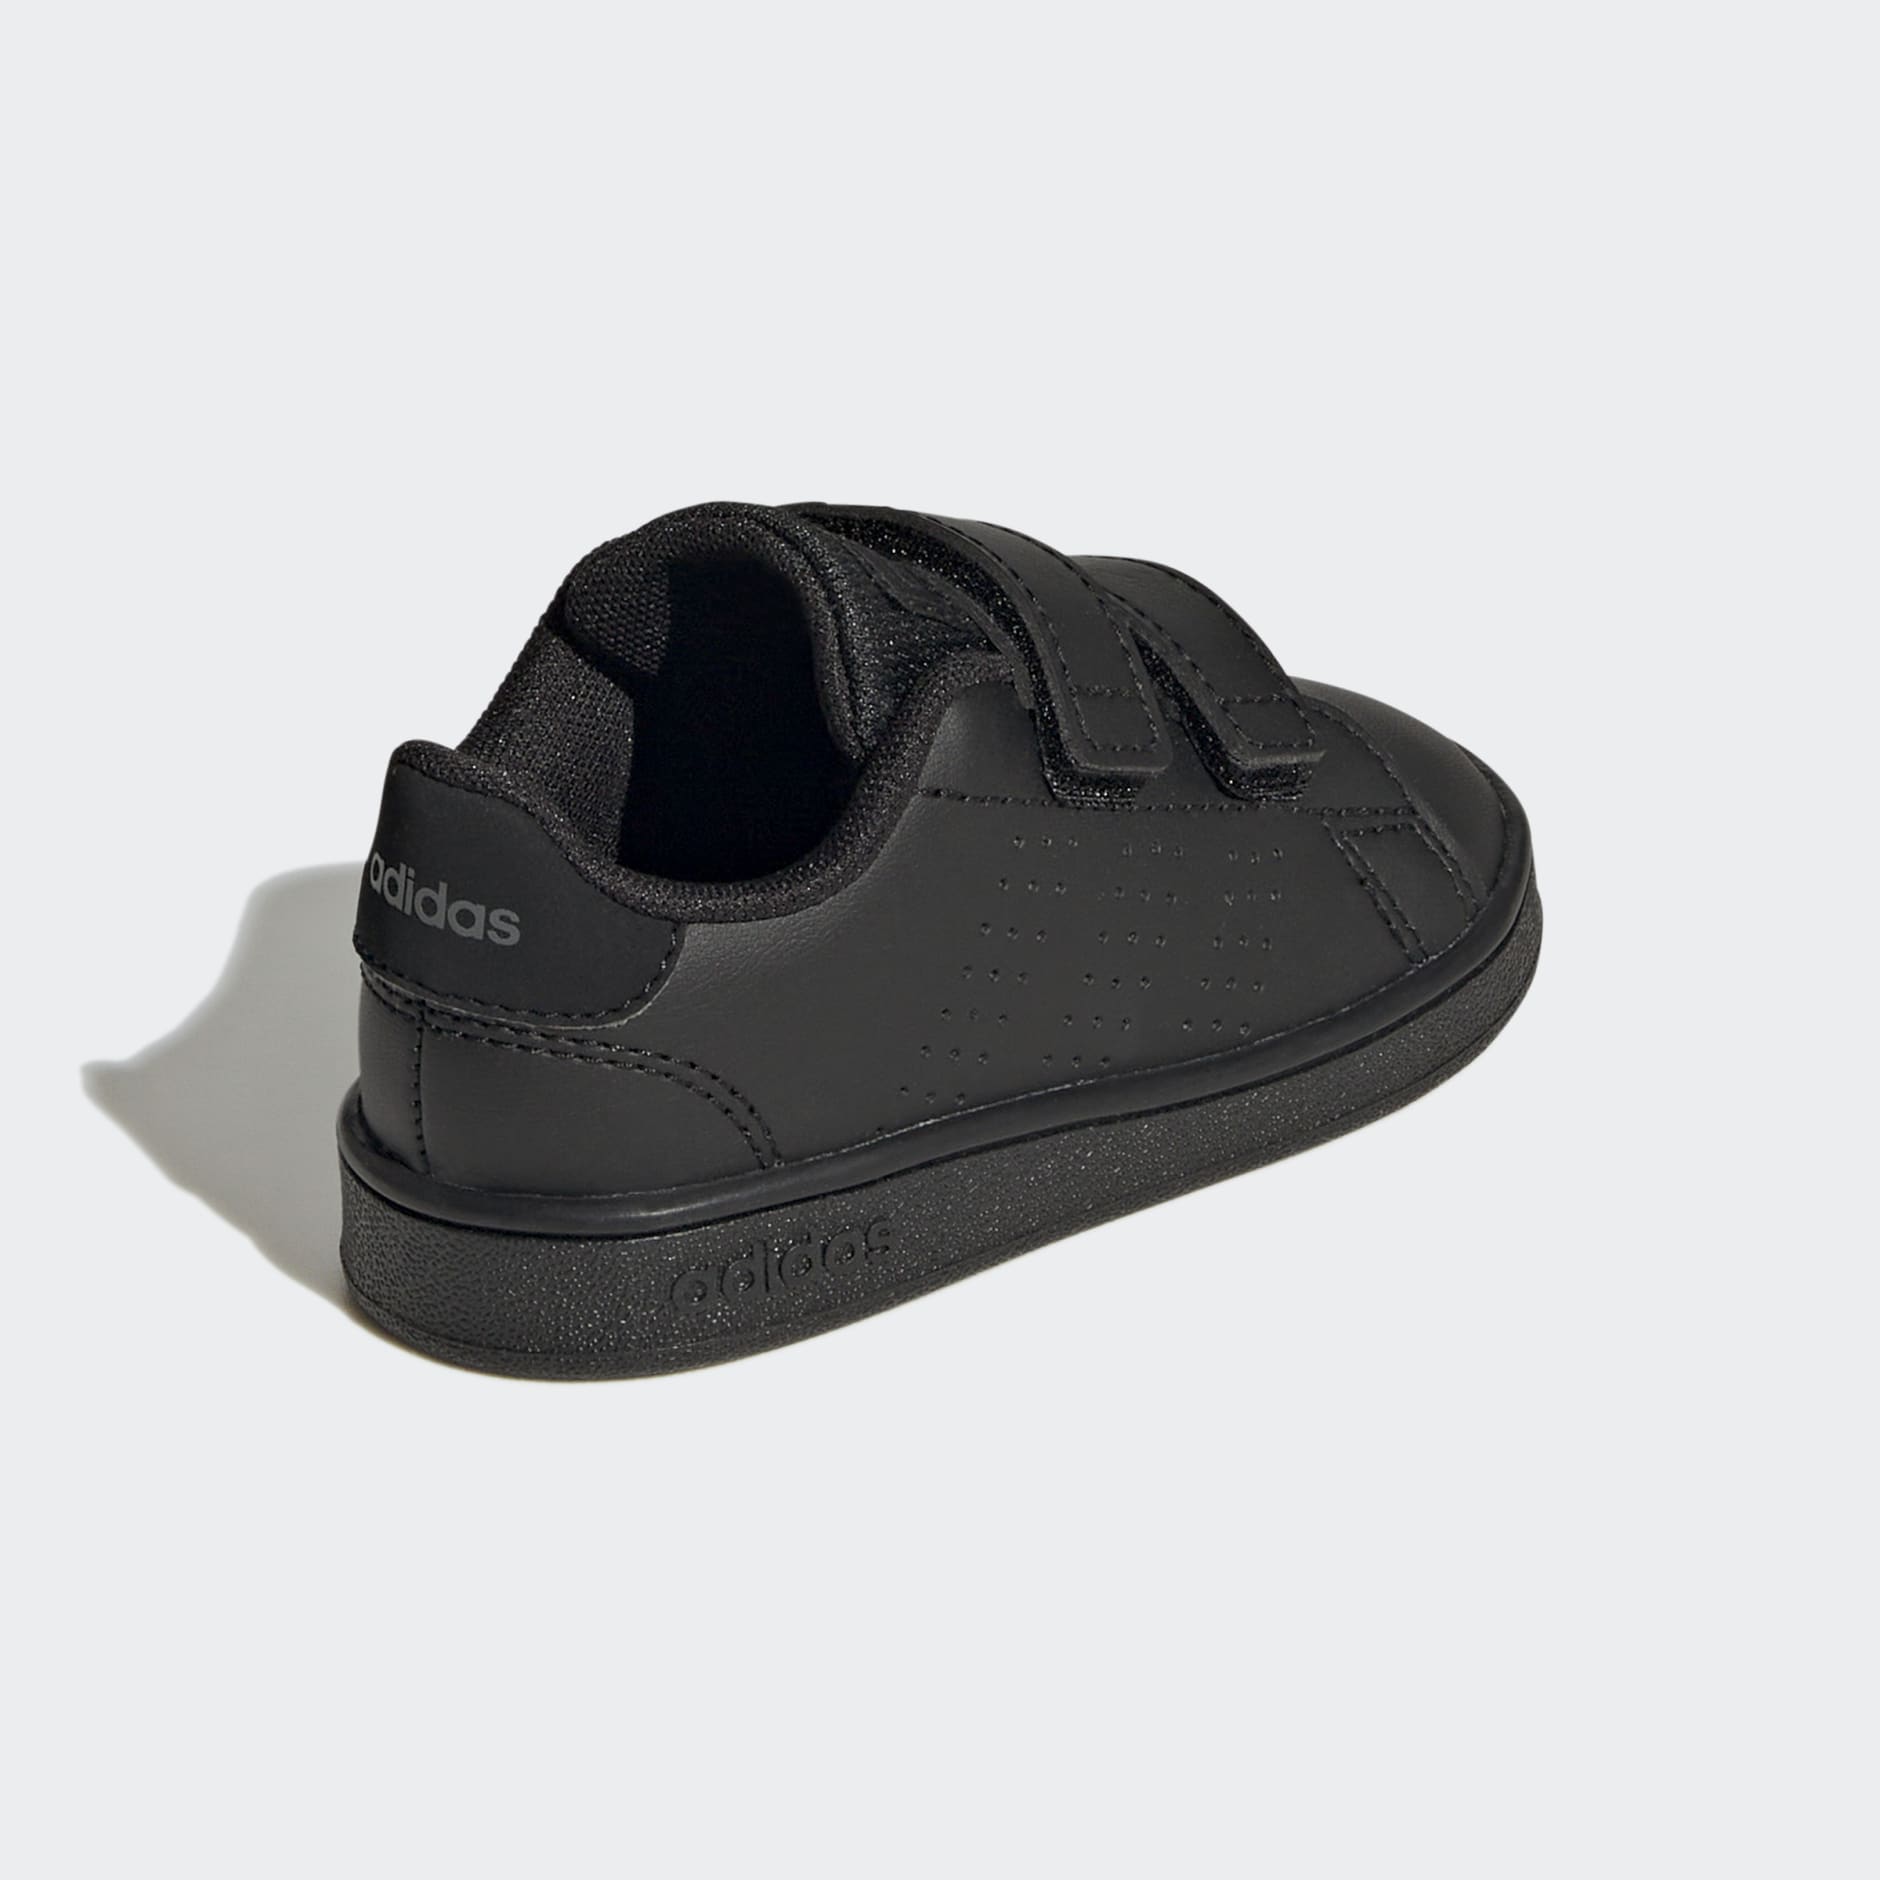 Court Lifestyle UAE Advantage Black | Hook-and-Loop adidas Shoes Two adidas -